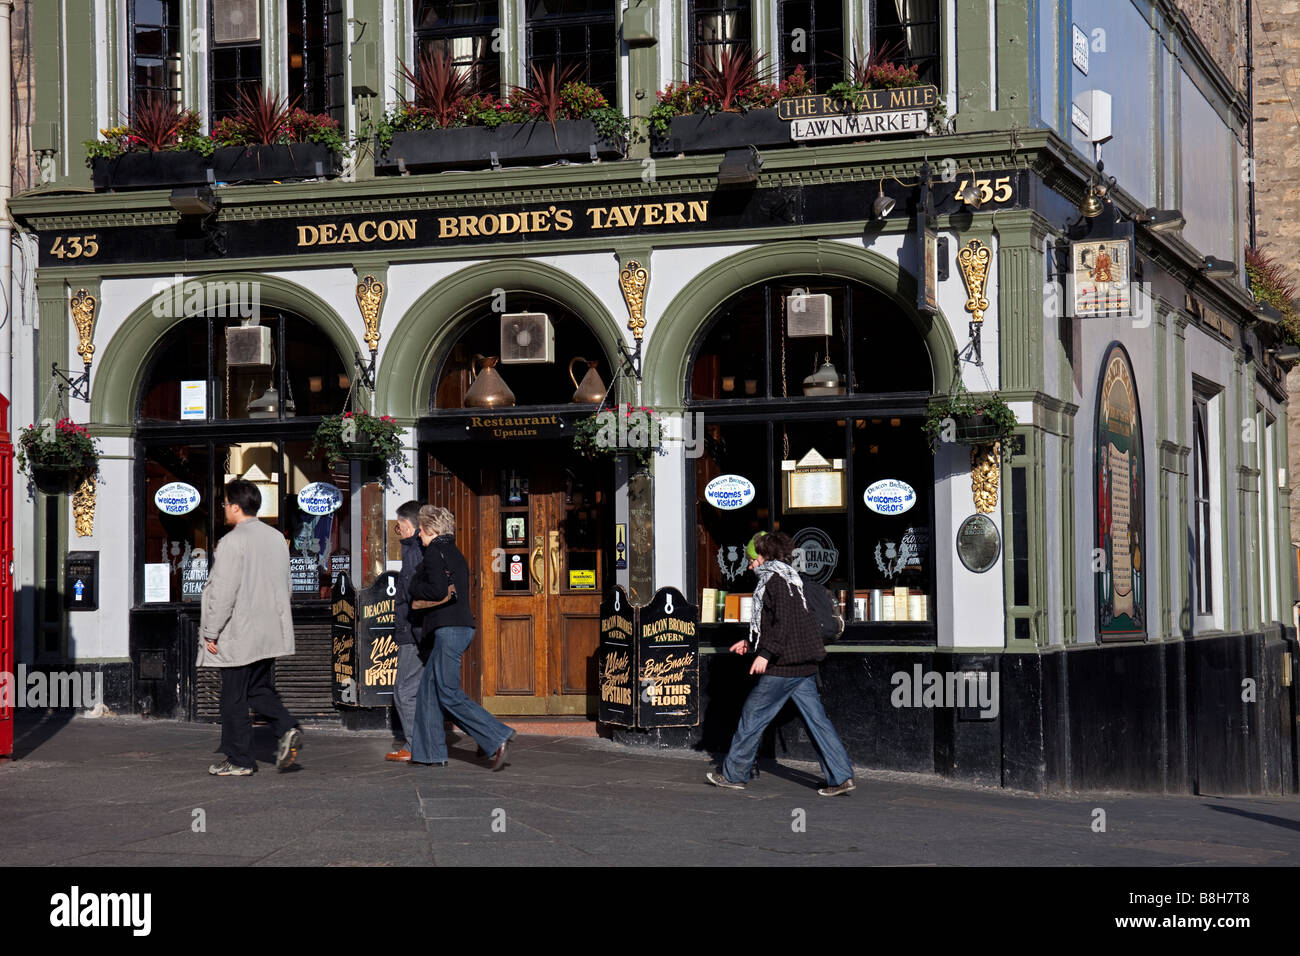 Deacon Brodies pub, Lawnmarket, Royal Mile, Edinburgh, Scotland, UK, Europe Stock Photo